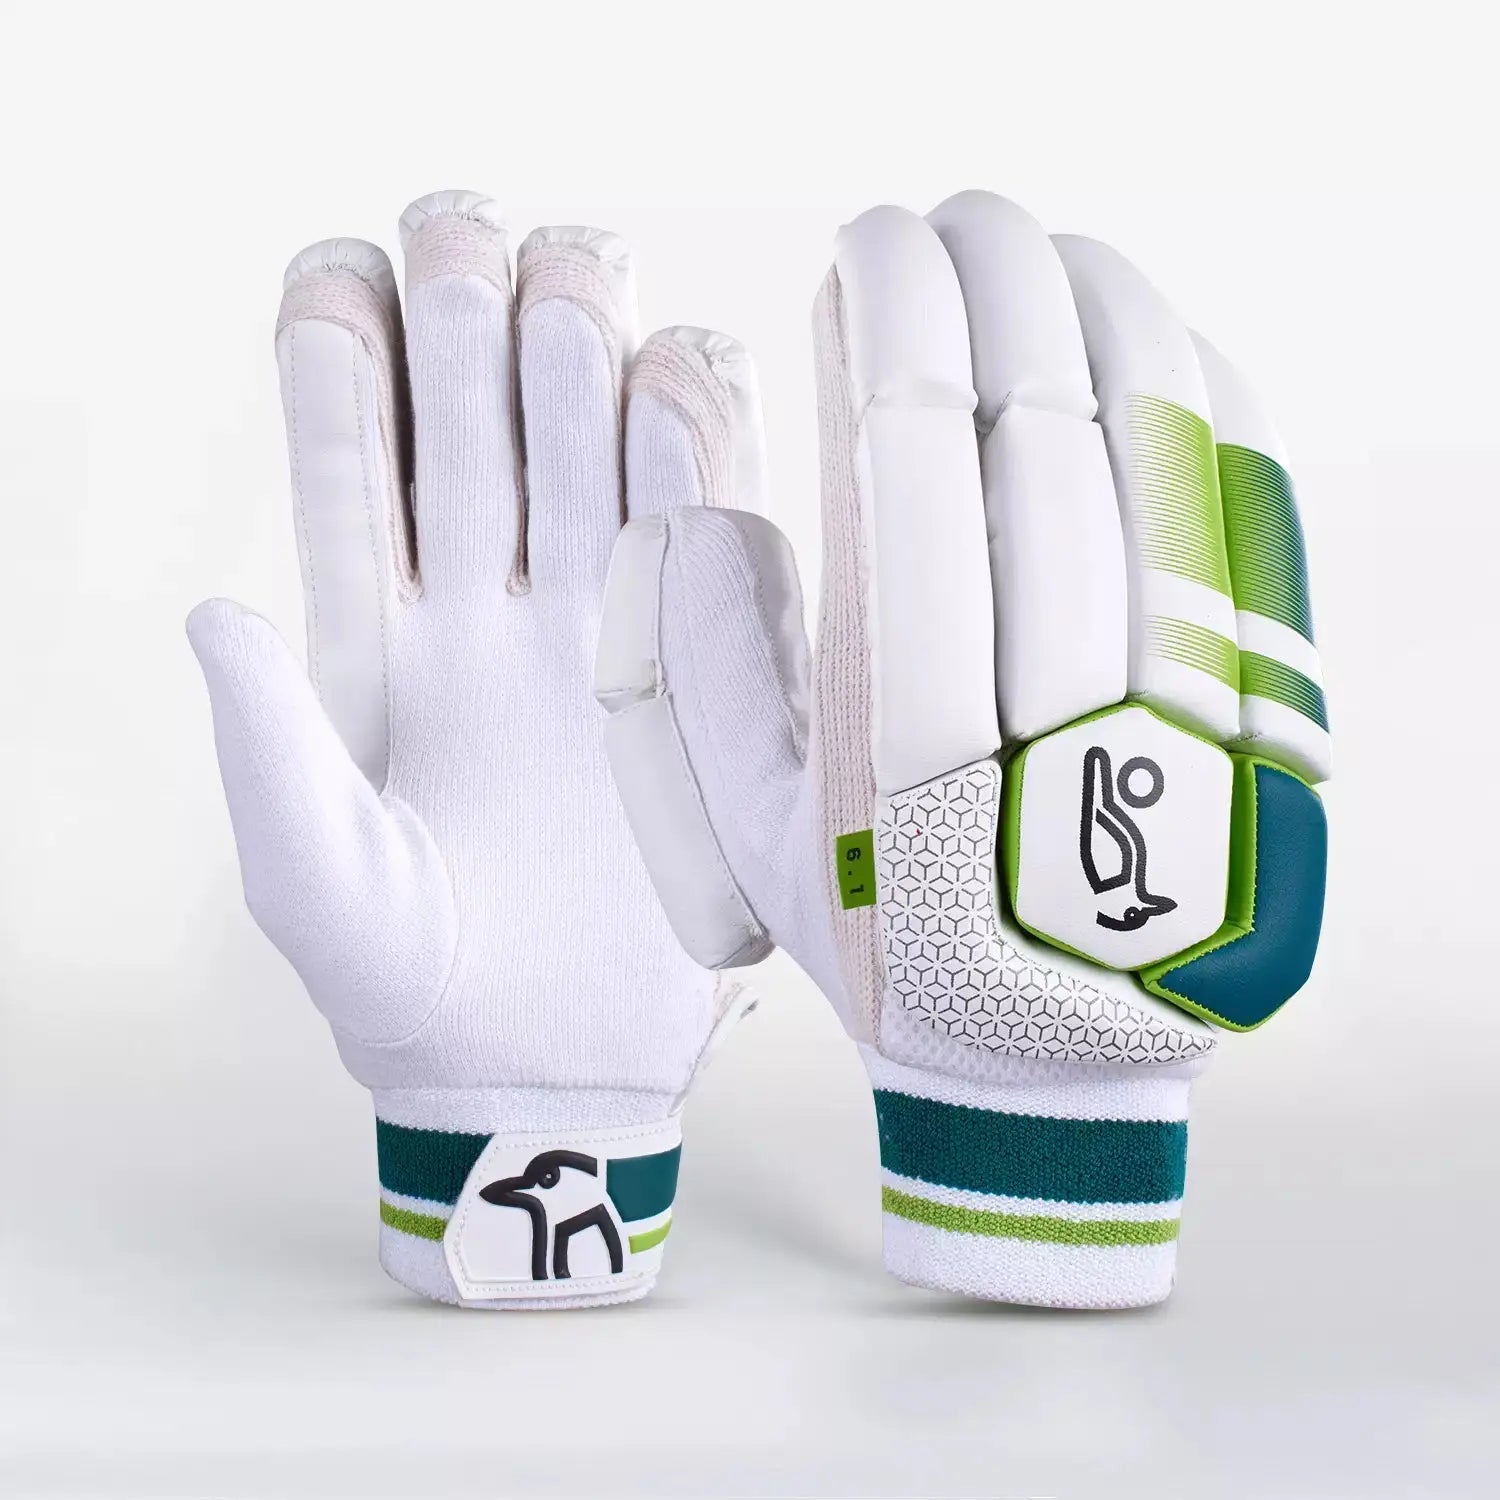 Kookaburra KAHUNA 6.1 Cricket Batting Gloves Comfort and Protection - Adult RH - GLOVE - BATTING